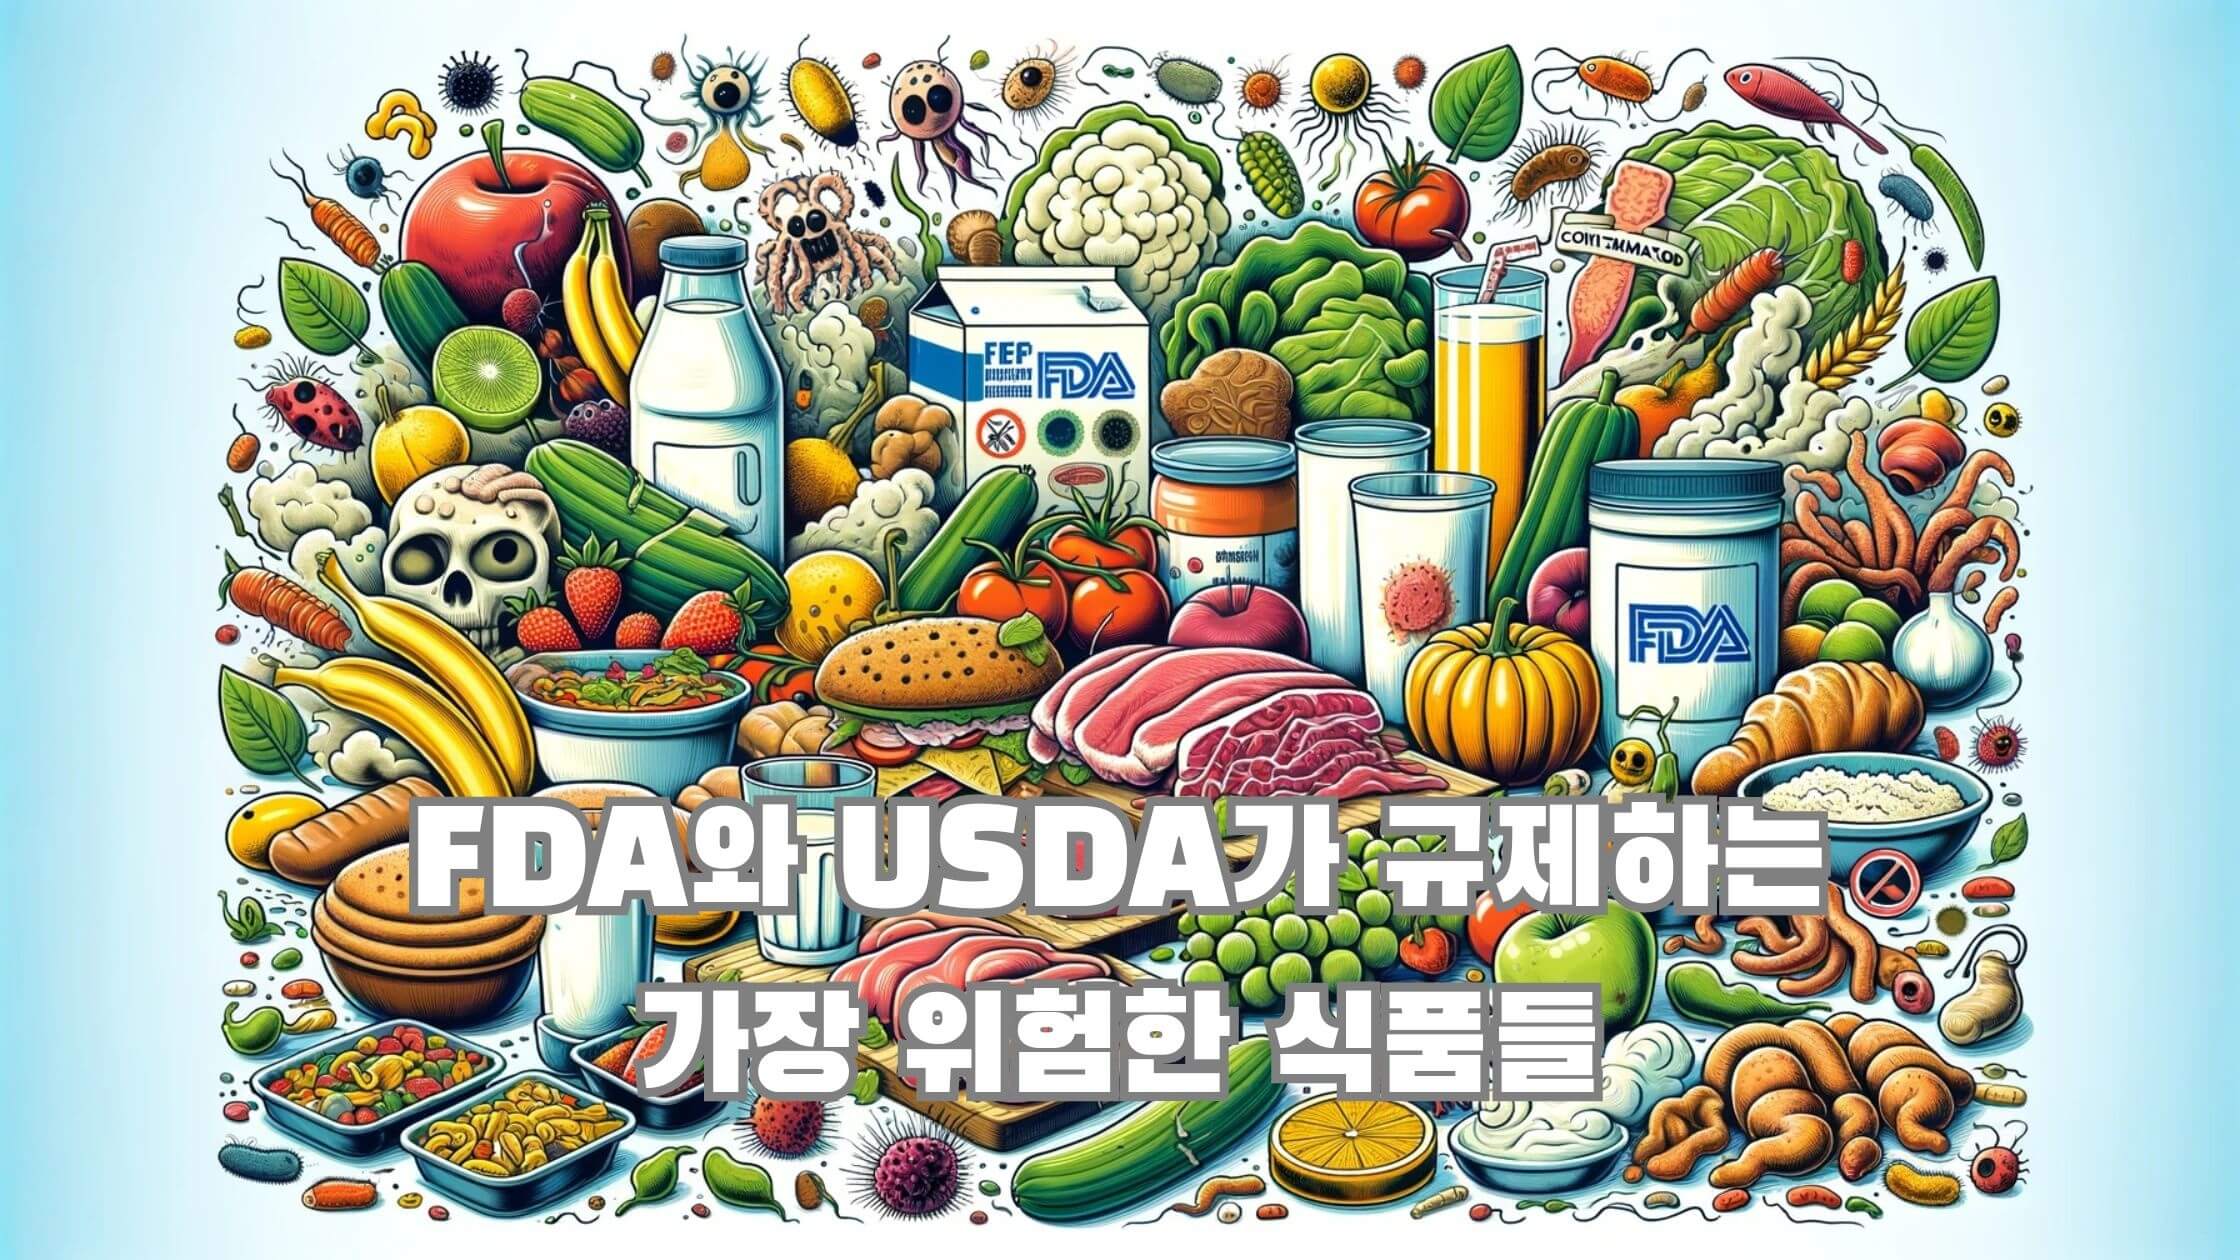 FDA와 USDA가 규제하는 가장 위험한 식품들 포스트 대표 이미지